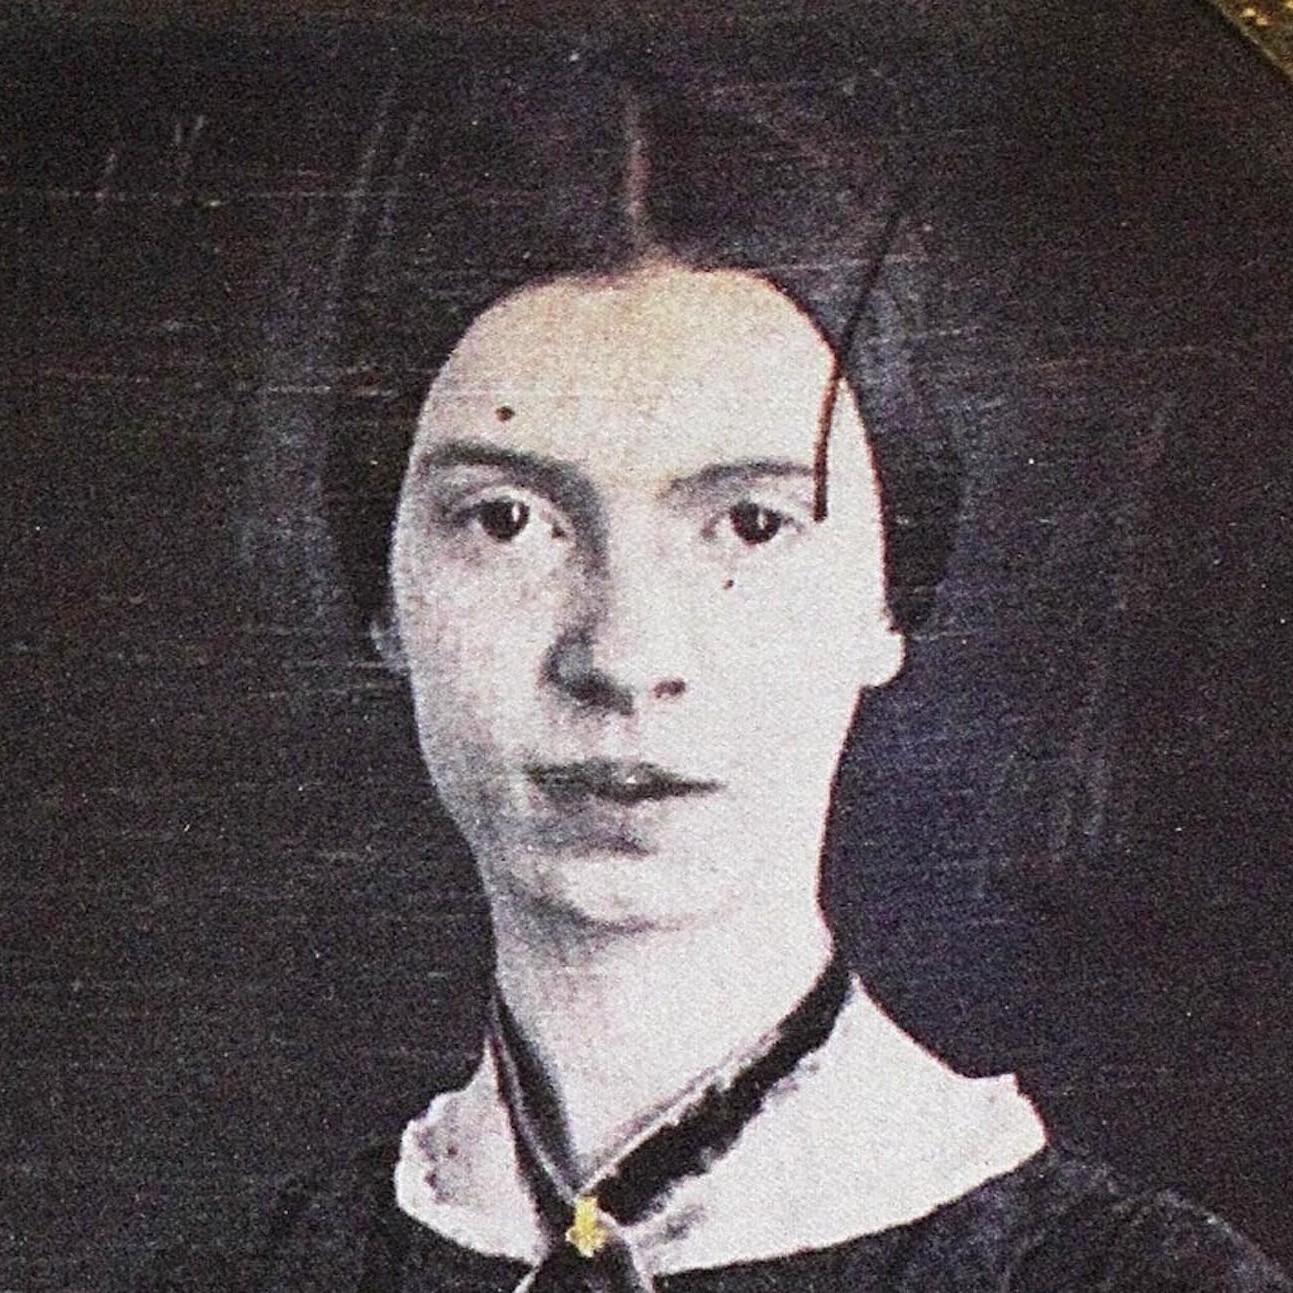 portrait of Emily Dickinson